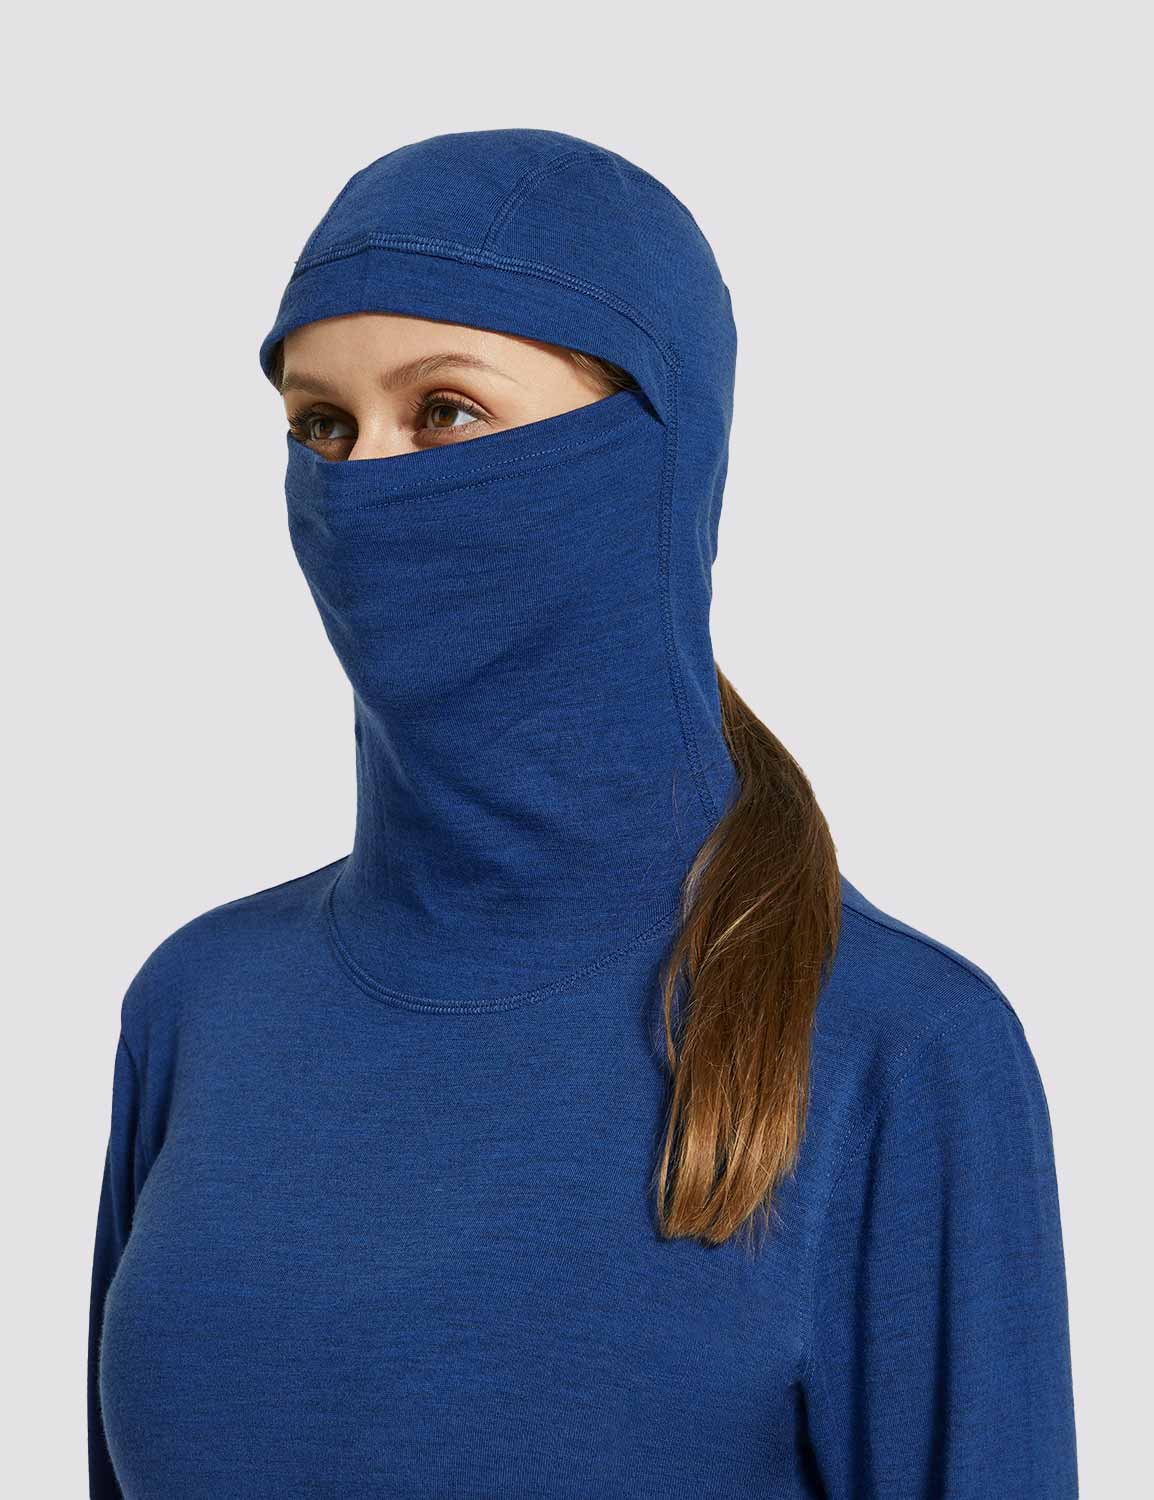 Baleaf Merino Wool Women's Hooded Base Layer Shirts Quartz Blue Details